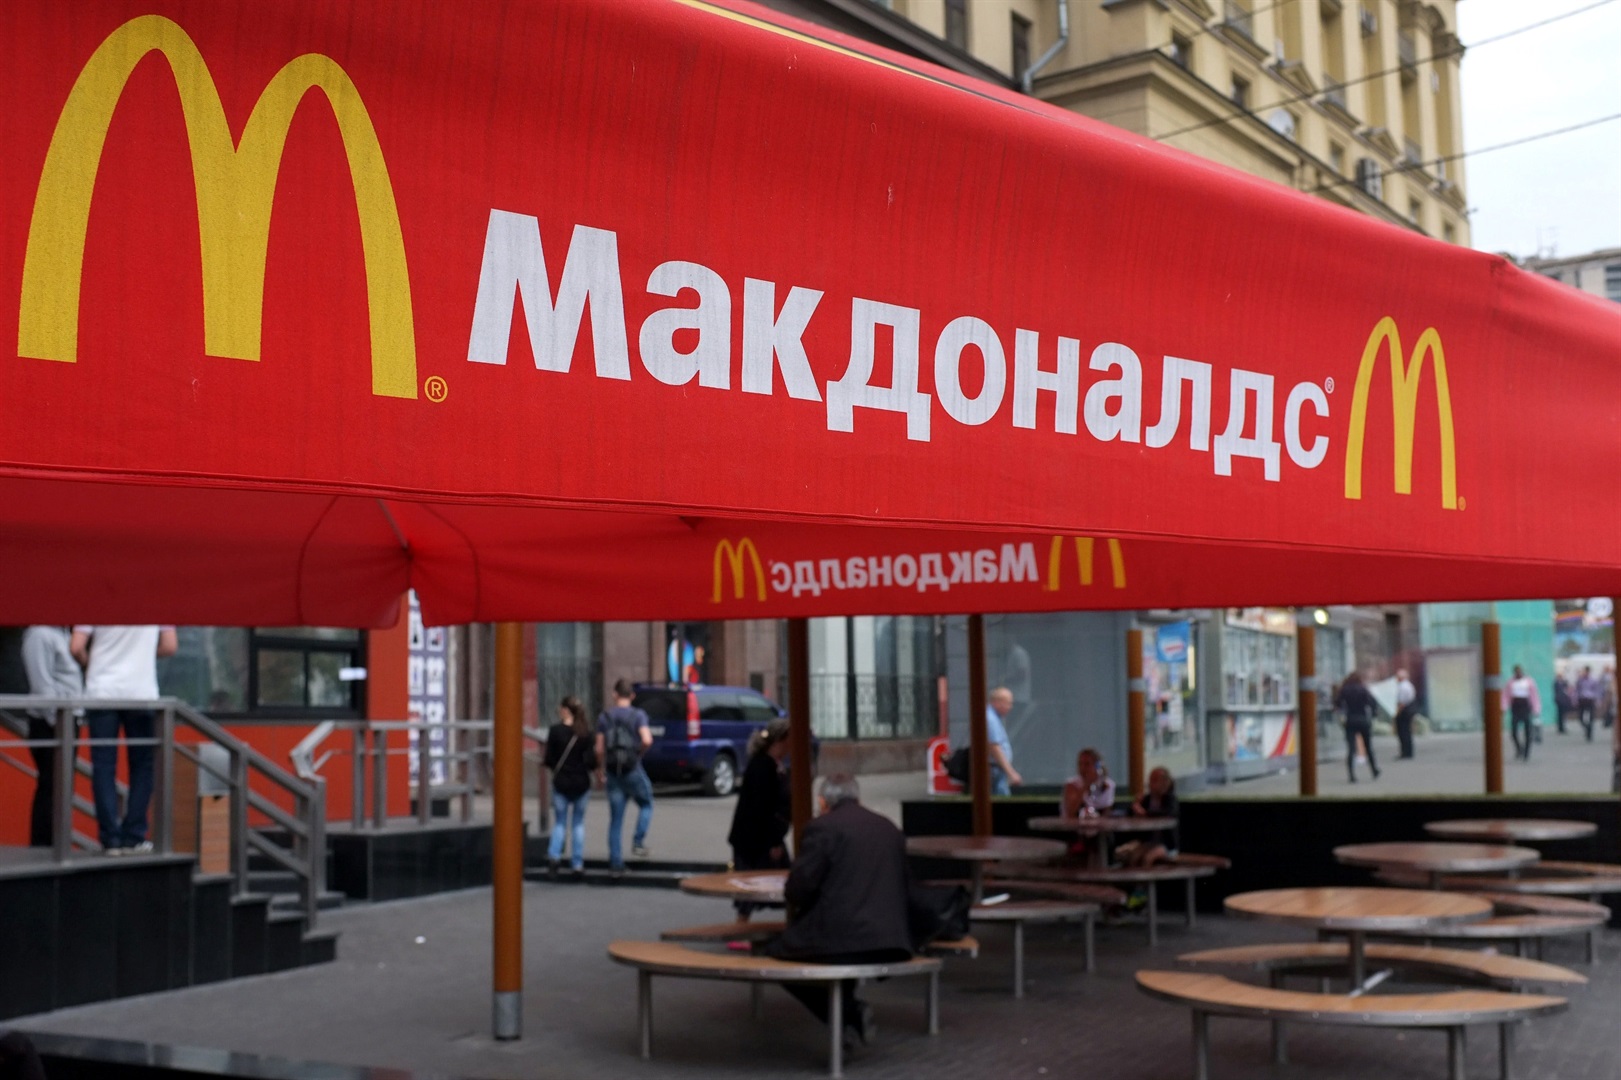 Pengusaha Rusia untuk mempekerjakan, membayar semua 62.000 karyawan McDonald’s di negara tersebut setelah keluarnya rantai